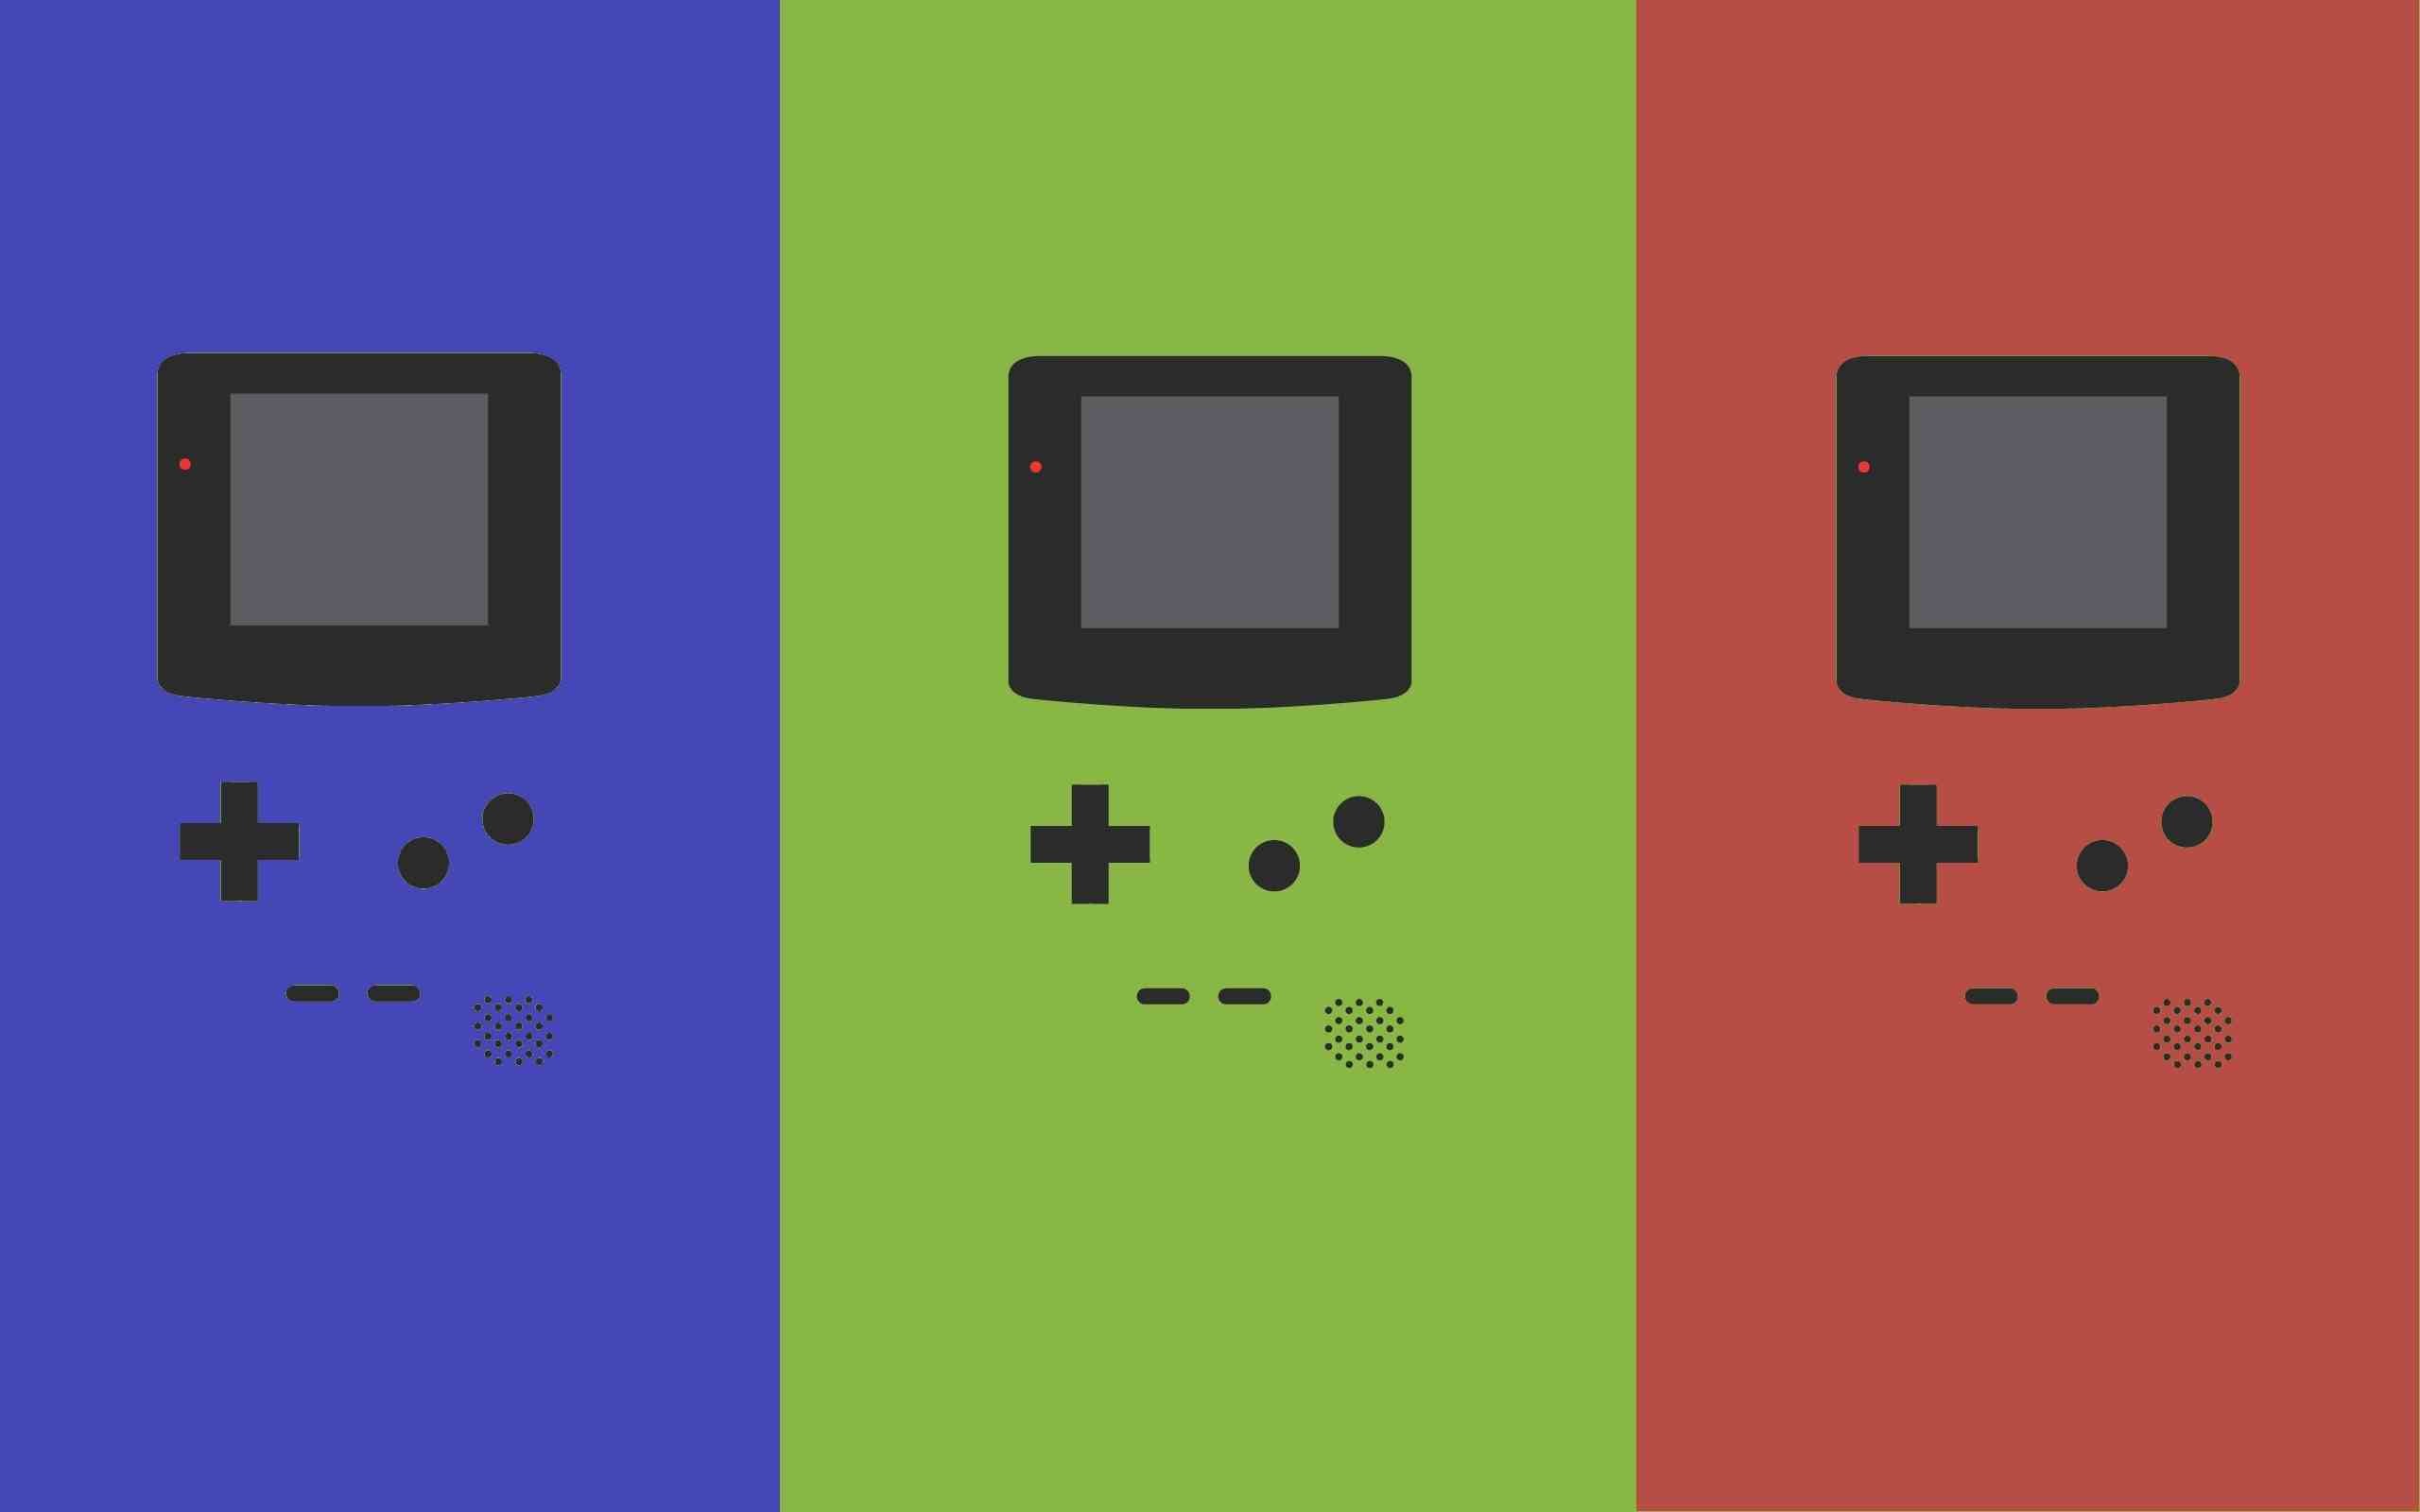 General 2560x1600 GameBoy collage colorful Nintendo retro games video games minimalism video game art panels